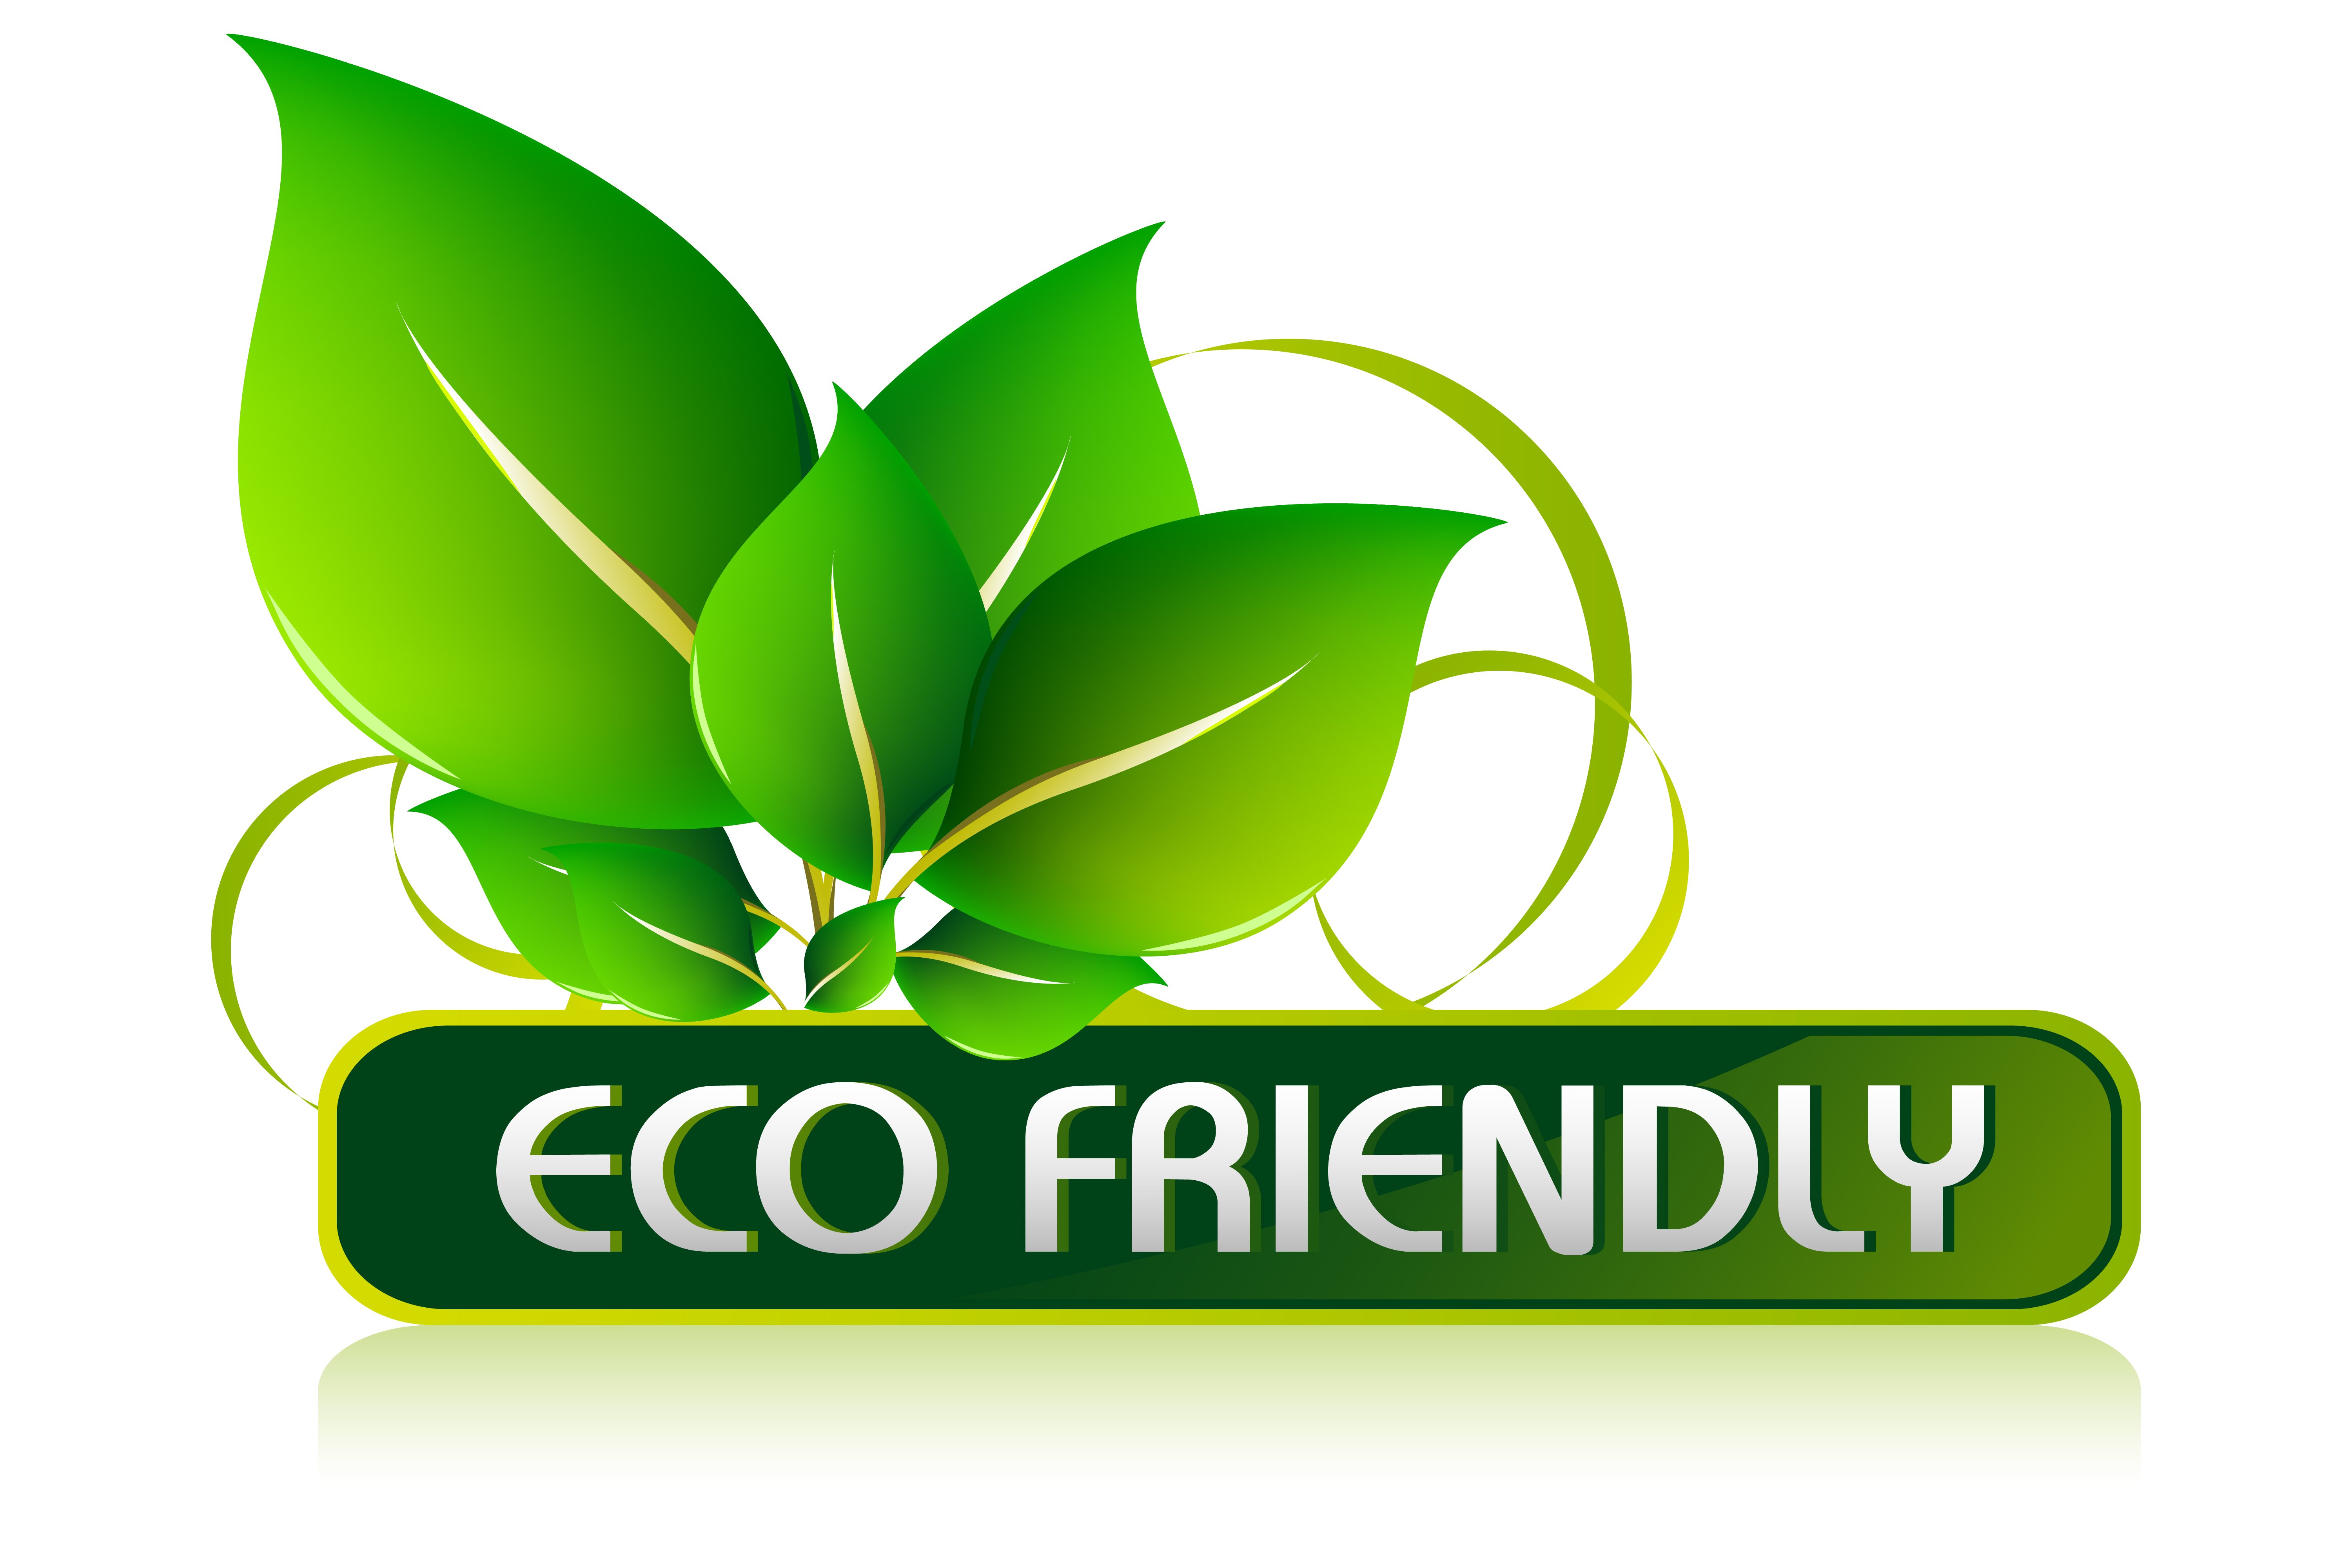 Логотип чисто. Значок эко. Значок экологически чистого продукта. Экология логотип. Эко-friendly.